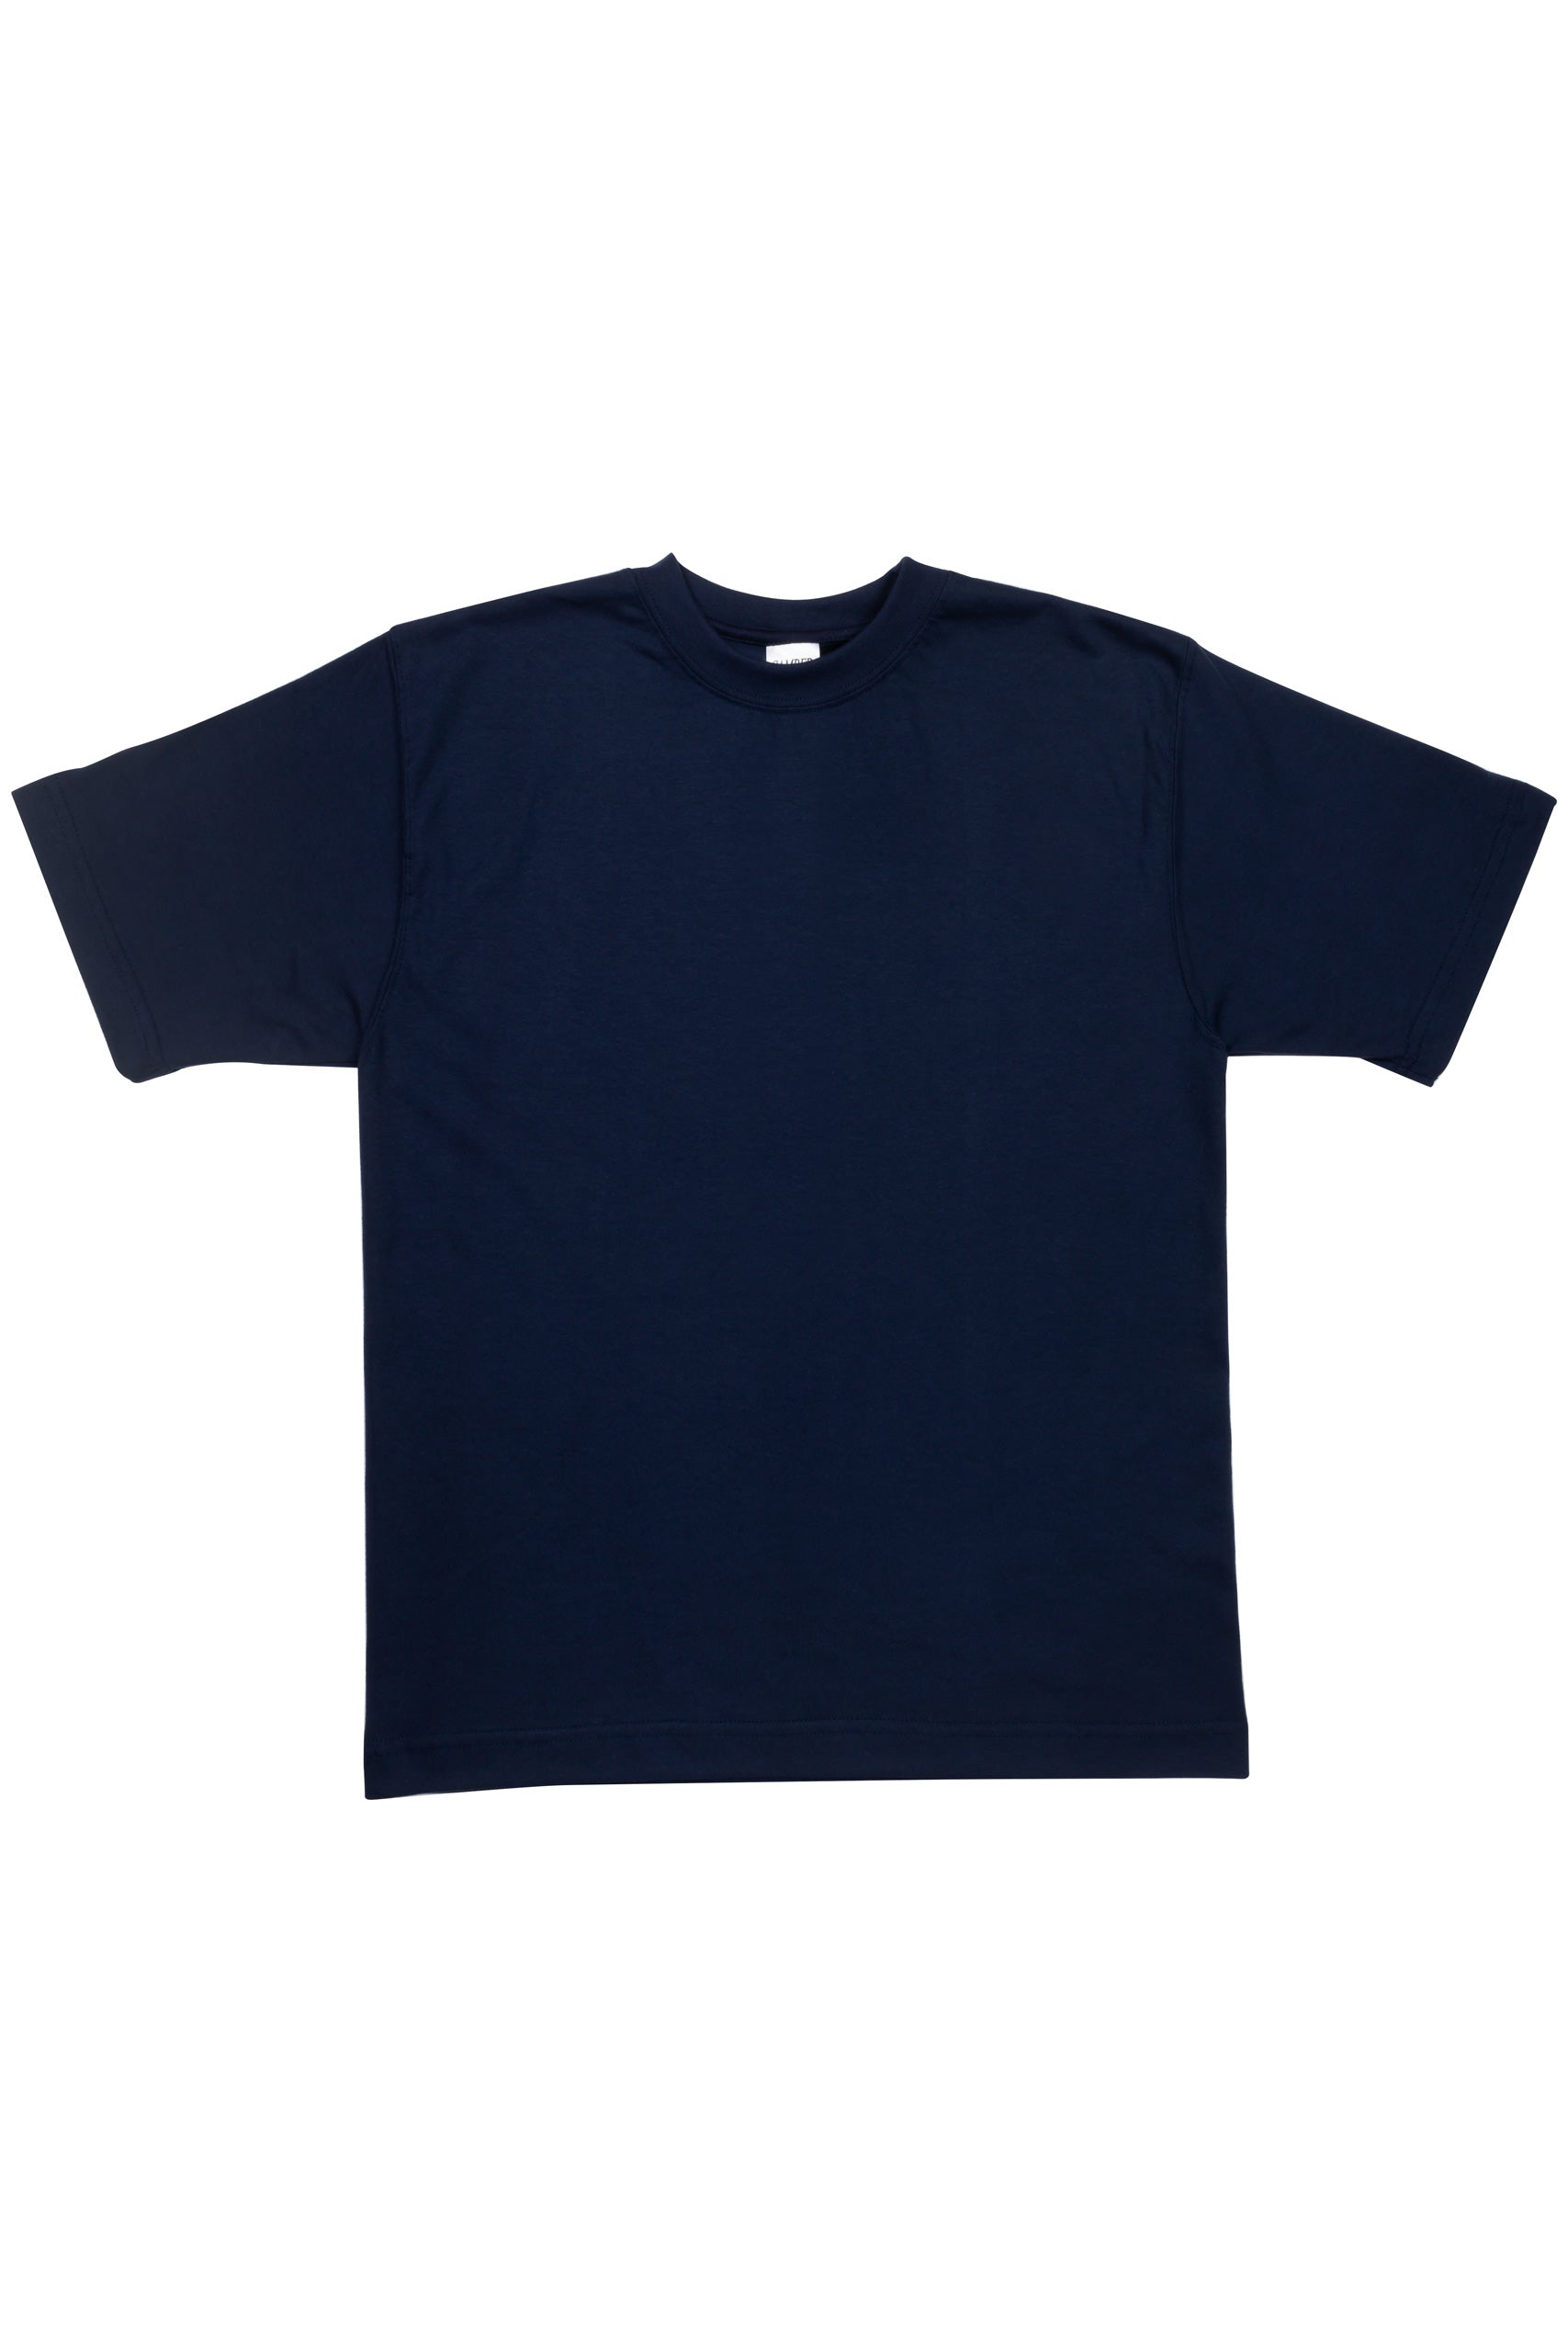 – T-Shirt Embark Navy USA 701 6oz Camber Clothiers